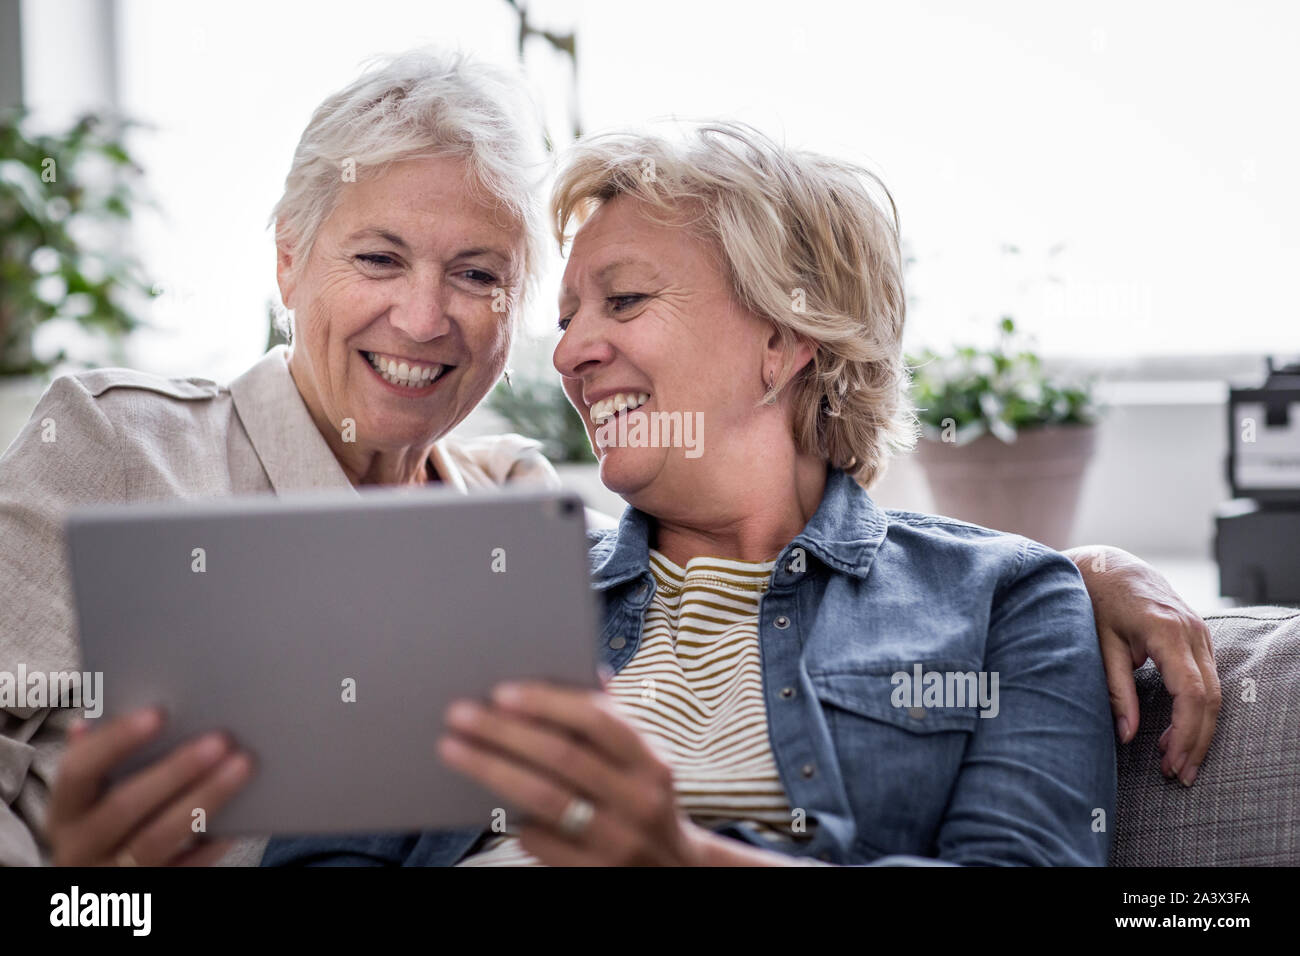 Lesbiana maduras pareja mirando tableta digital juntos en el sofá Foto de stock